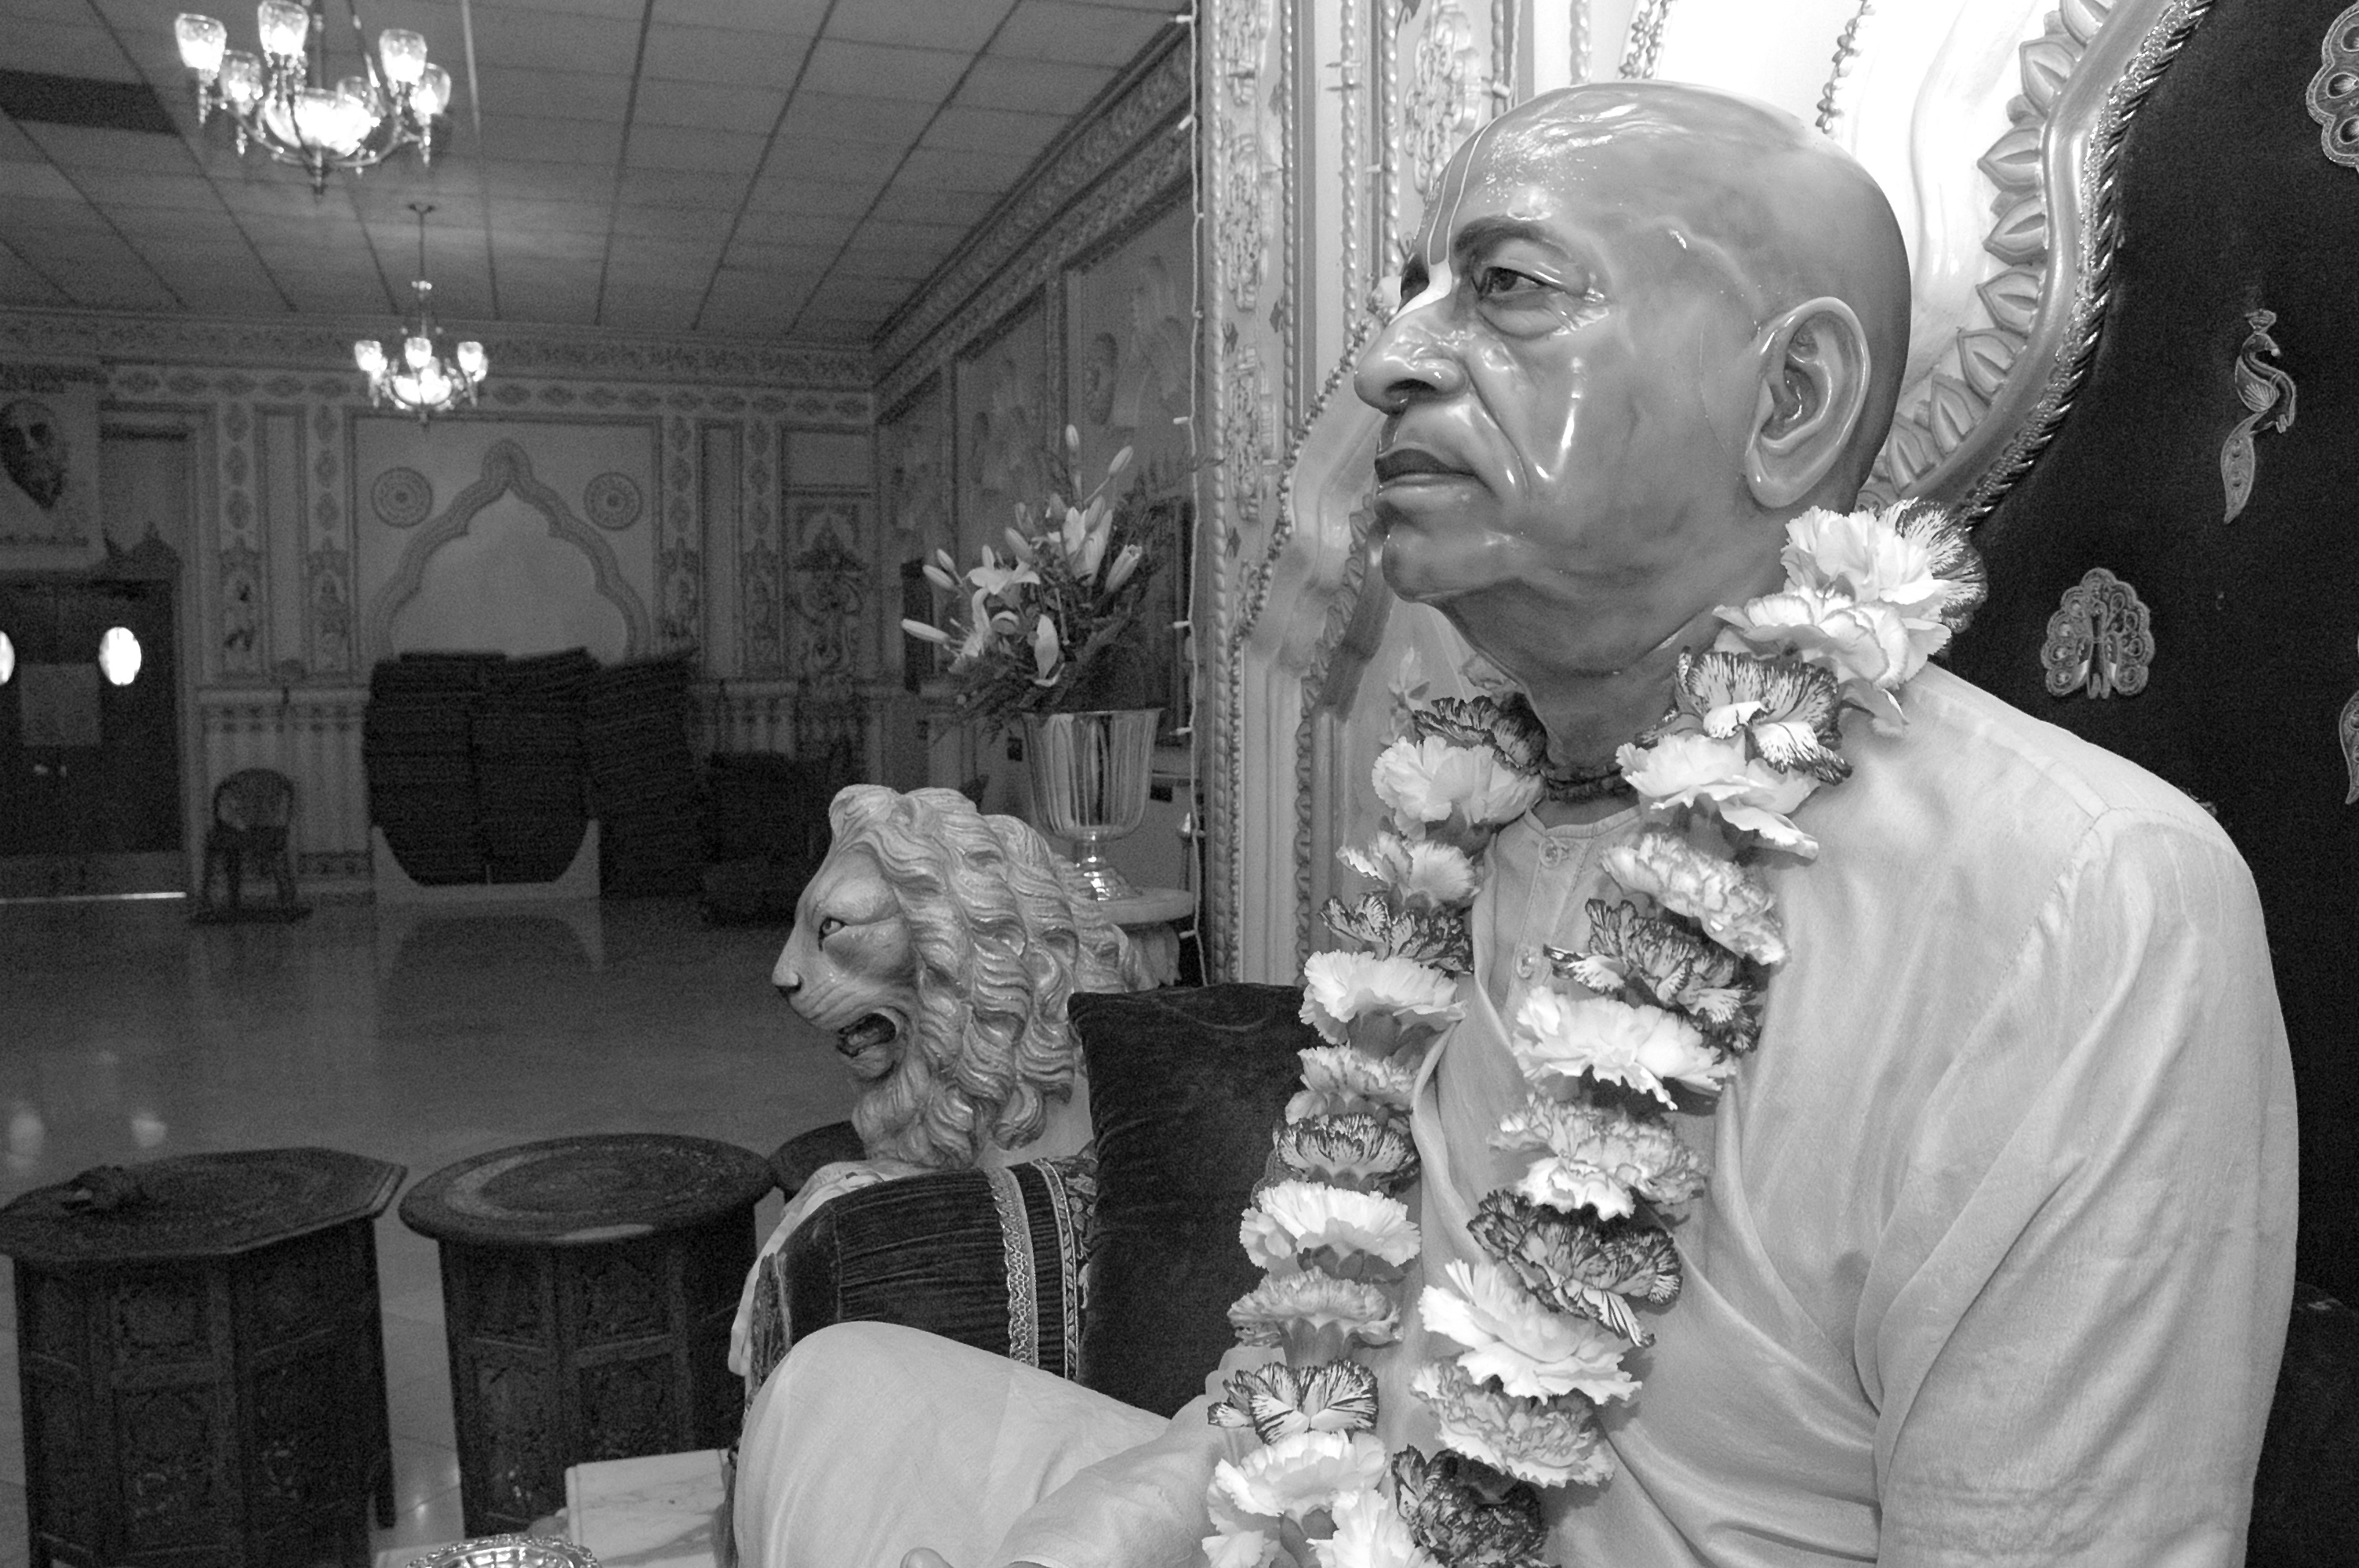 Srila Prabhupada Chanting Japa - 108 times with soothing music 